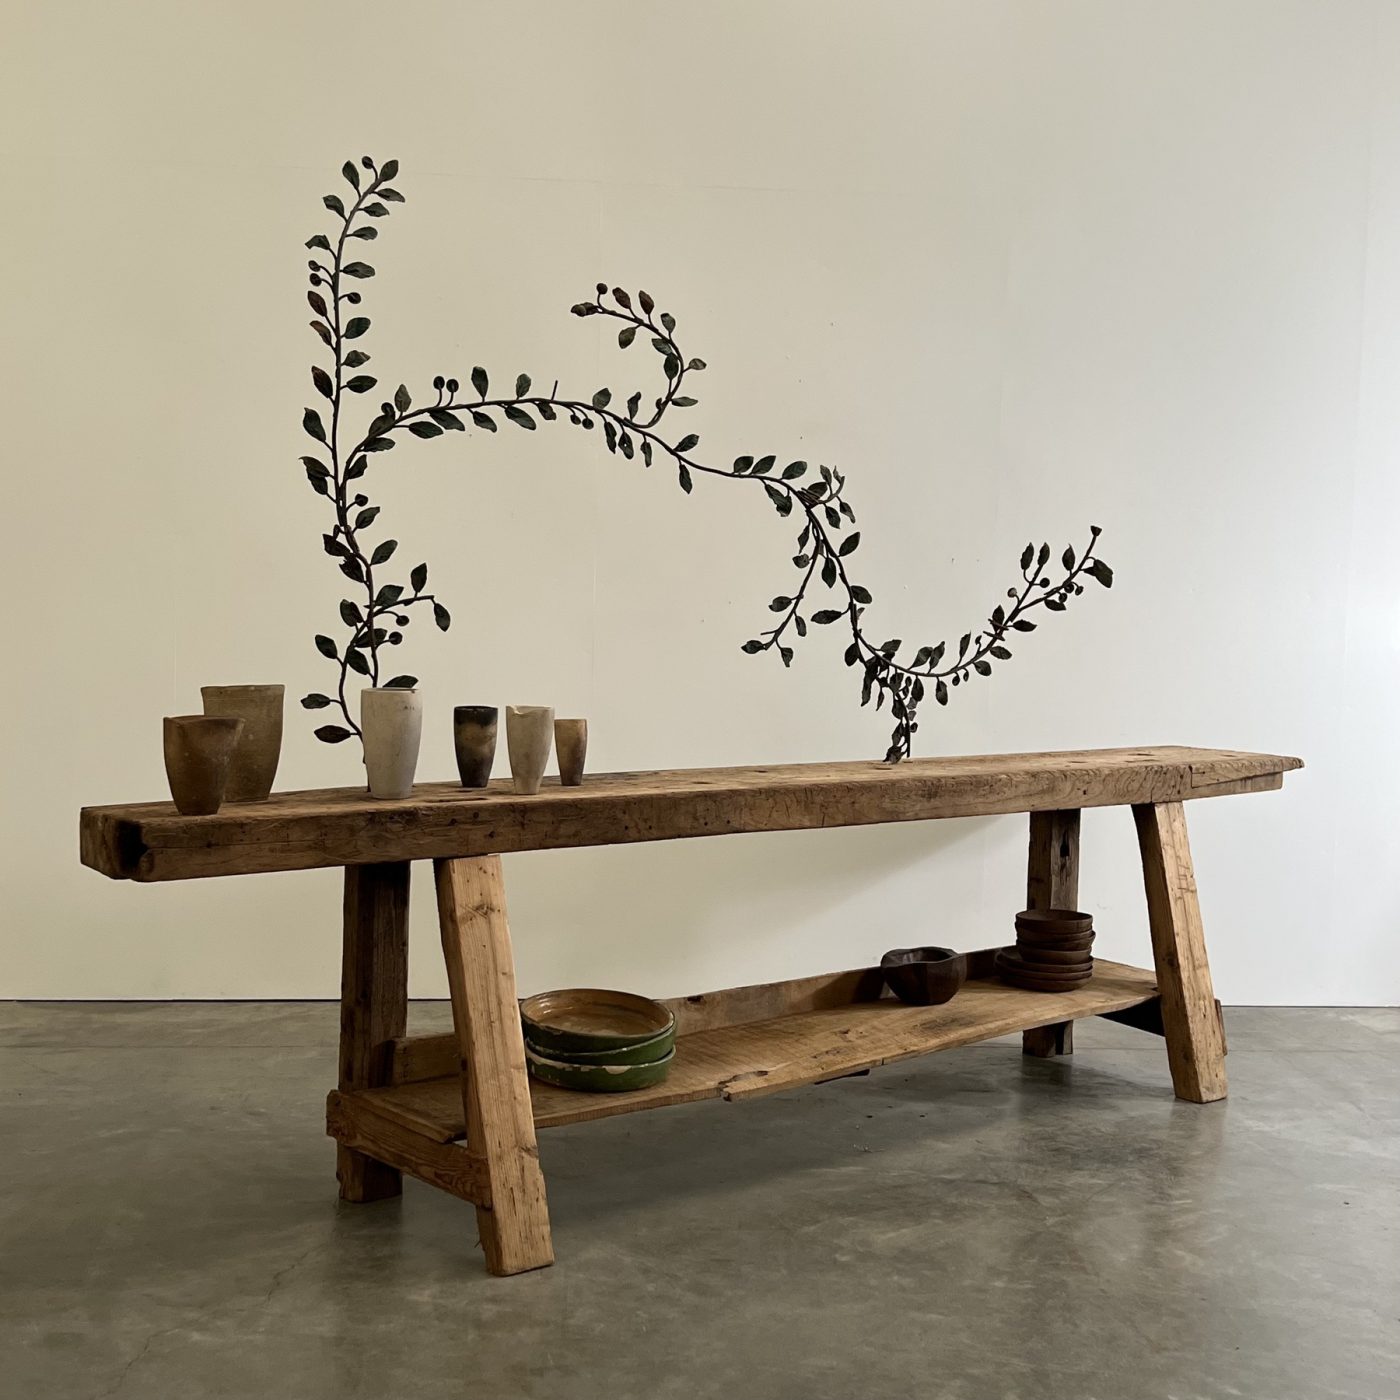 objet-vagabond-carpenter-table0005